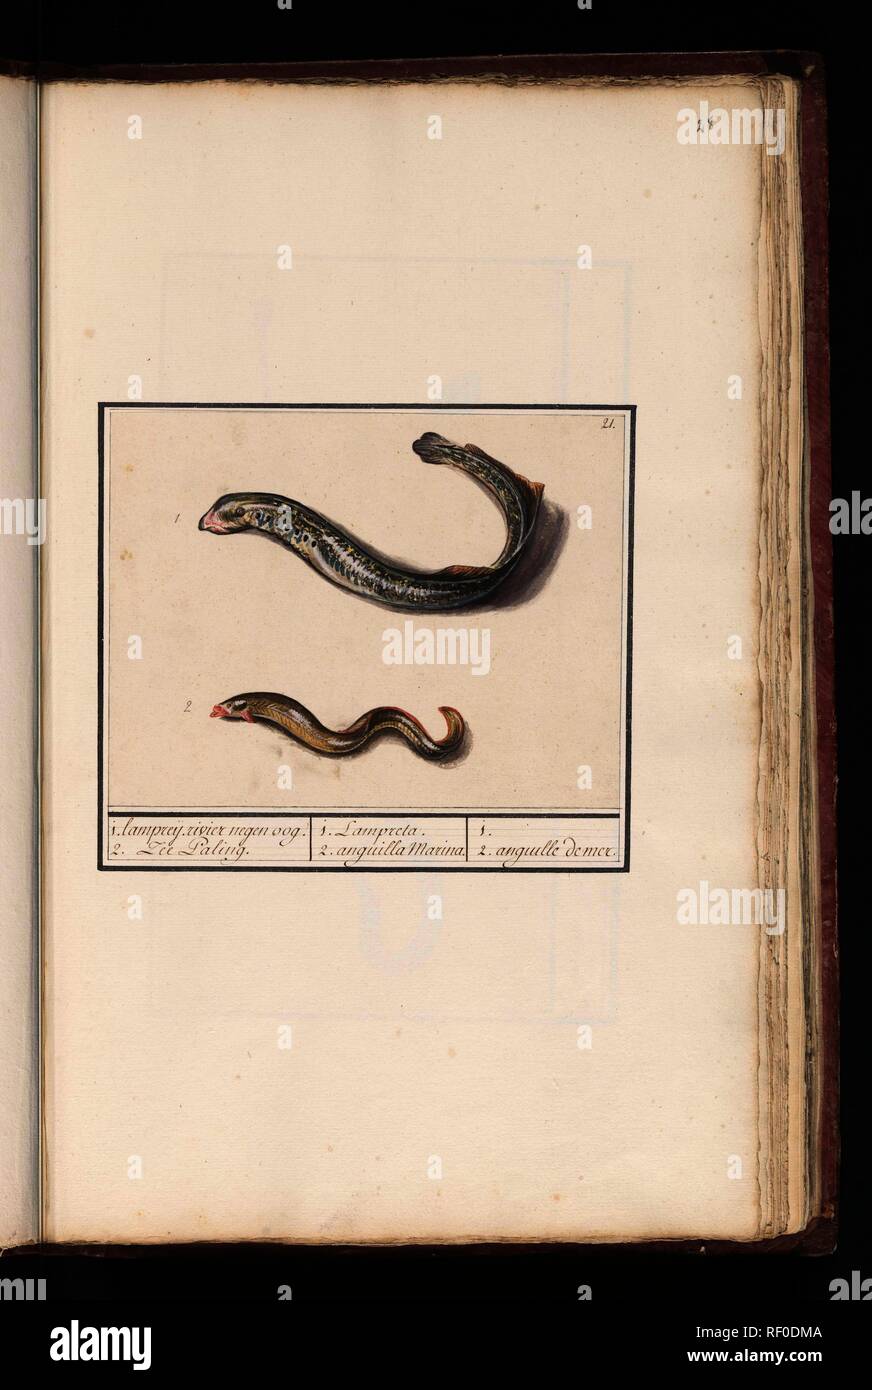 Rivierprik (Lampetra fluviatilis) en zeepaling (Congridae). 1. lampreij. rivier negen oog. 2. Zee Paling. / 1. Lampreta. 2. anguilla Marina. / 1. 2. anguille de mer. (title on object). Draughtsman: Anselmus Boëtius de Boodt. Draughtsman: Elias Verhulst. Dating: 1596 - 1610. Place: Praag. Measurements: h 145 mm × w 189 mm. Museum: Rijksmuseum, Amsterdam. Stock Photo